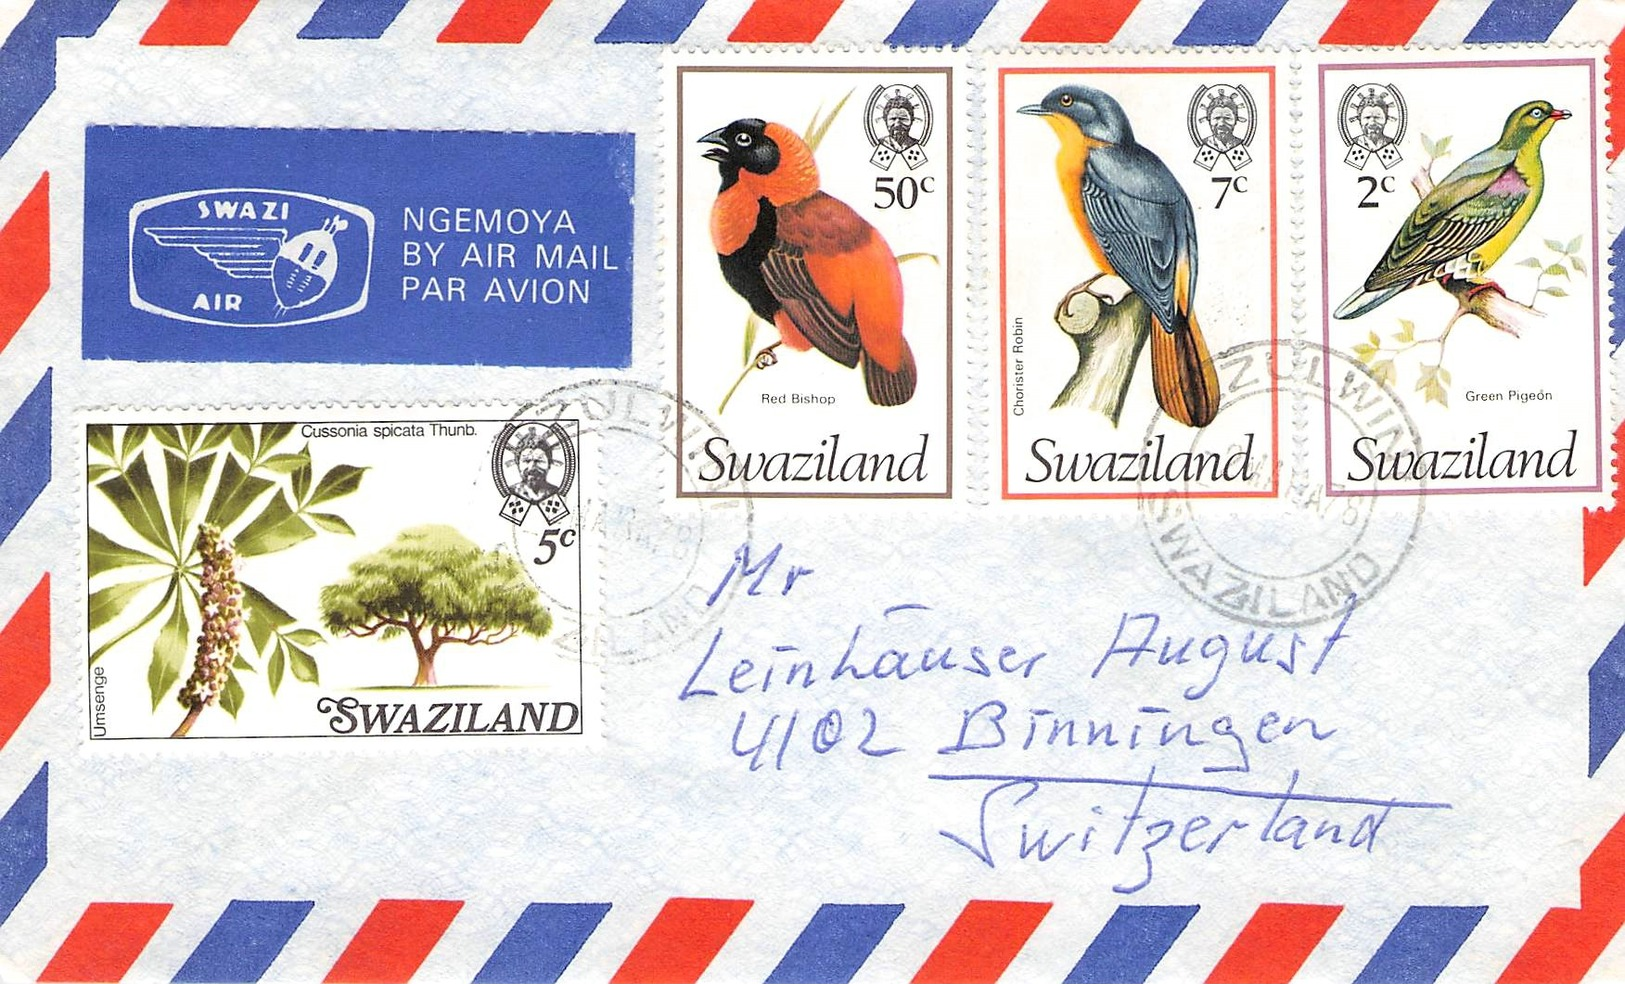 SWAZILAND - AIR MAIL LETTER 1978 -> BINNINGEN/SUISSE Mi #285, 235, 240, 246 - Swaziland (1968-...)